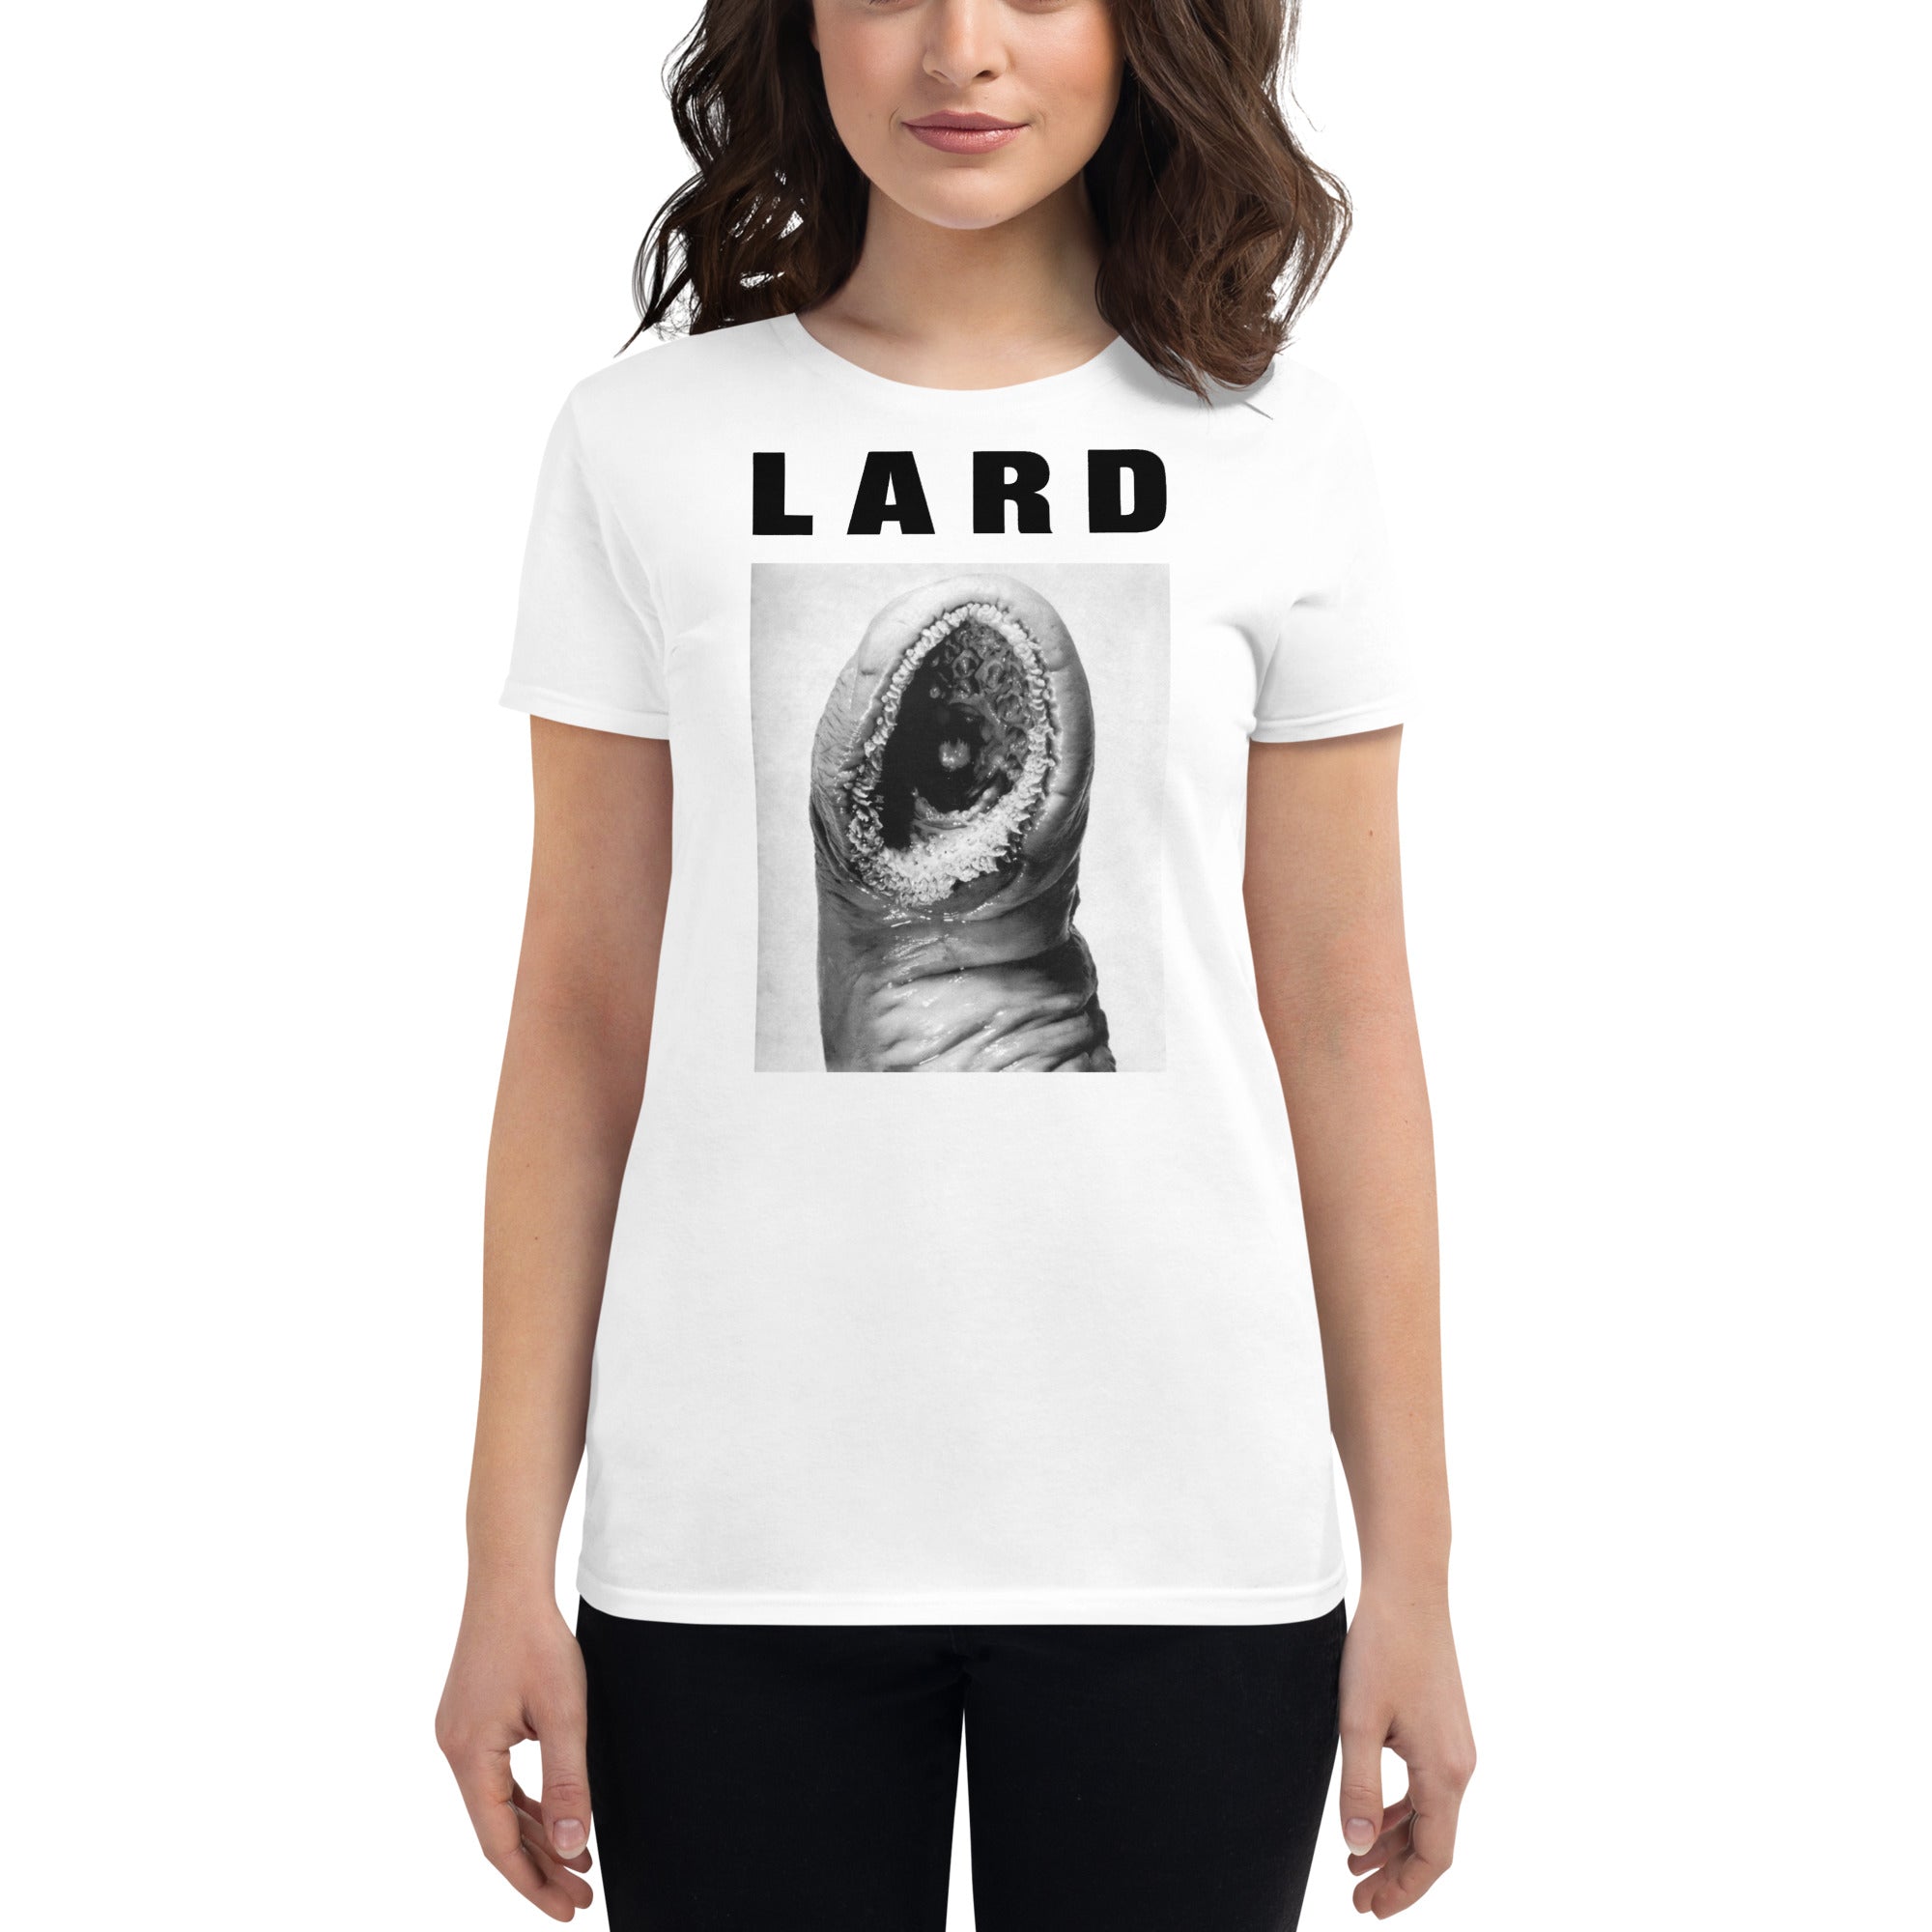 LARD "The Power Of Lard" Fitted White T-Shirt